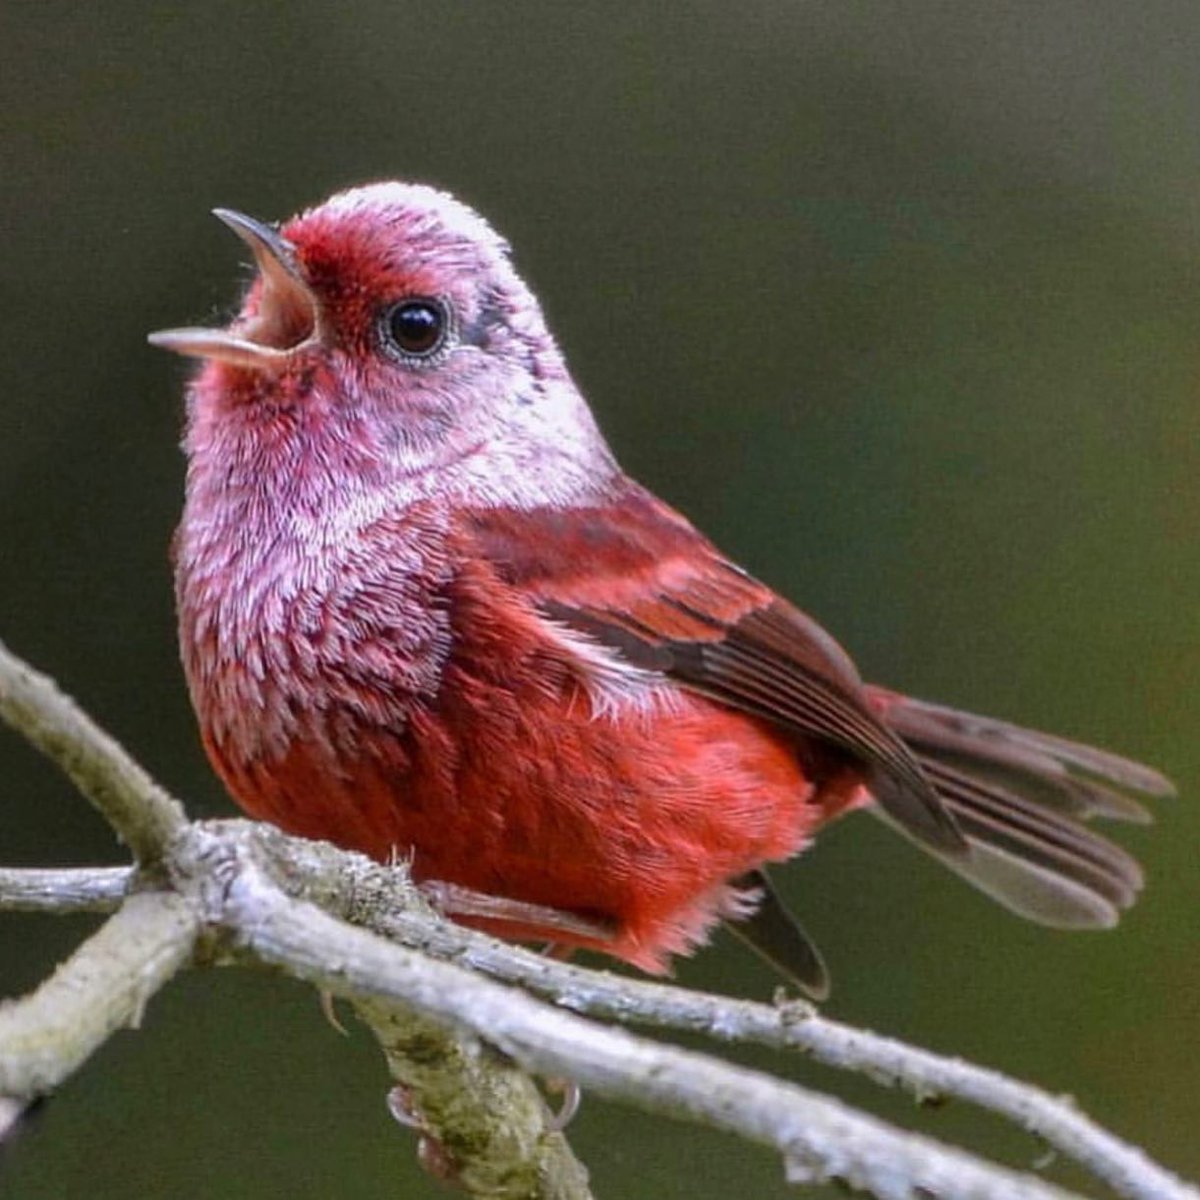 Pink-headed Warbler 💗❤️
By birdlover_gt